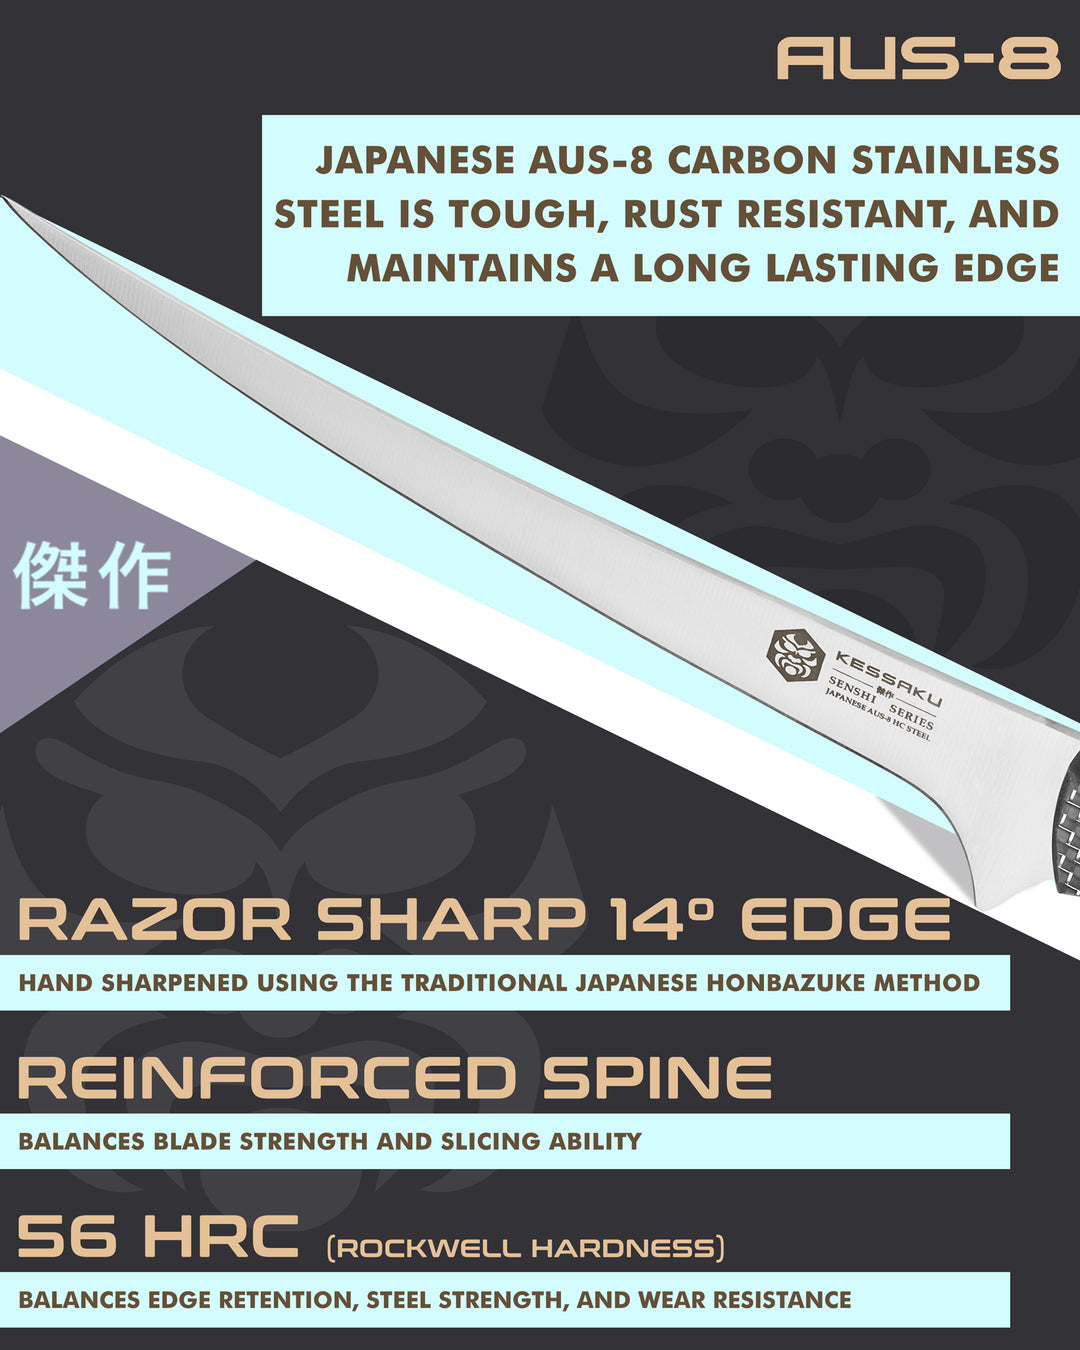 Kessaku Senshi Fillet Knife blade features: AUS-8 steel, 56 HRC, 14 degree edge, reinforced spine